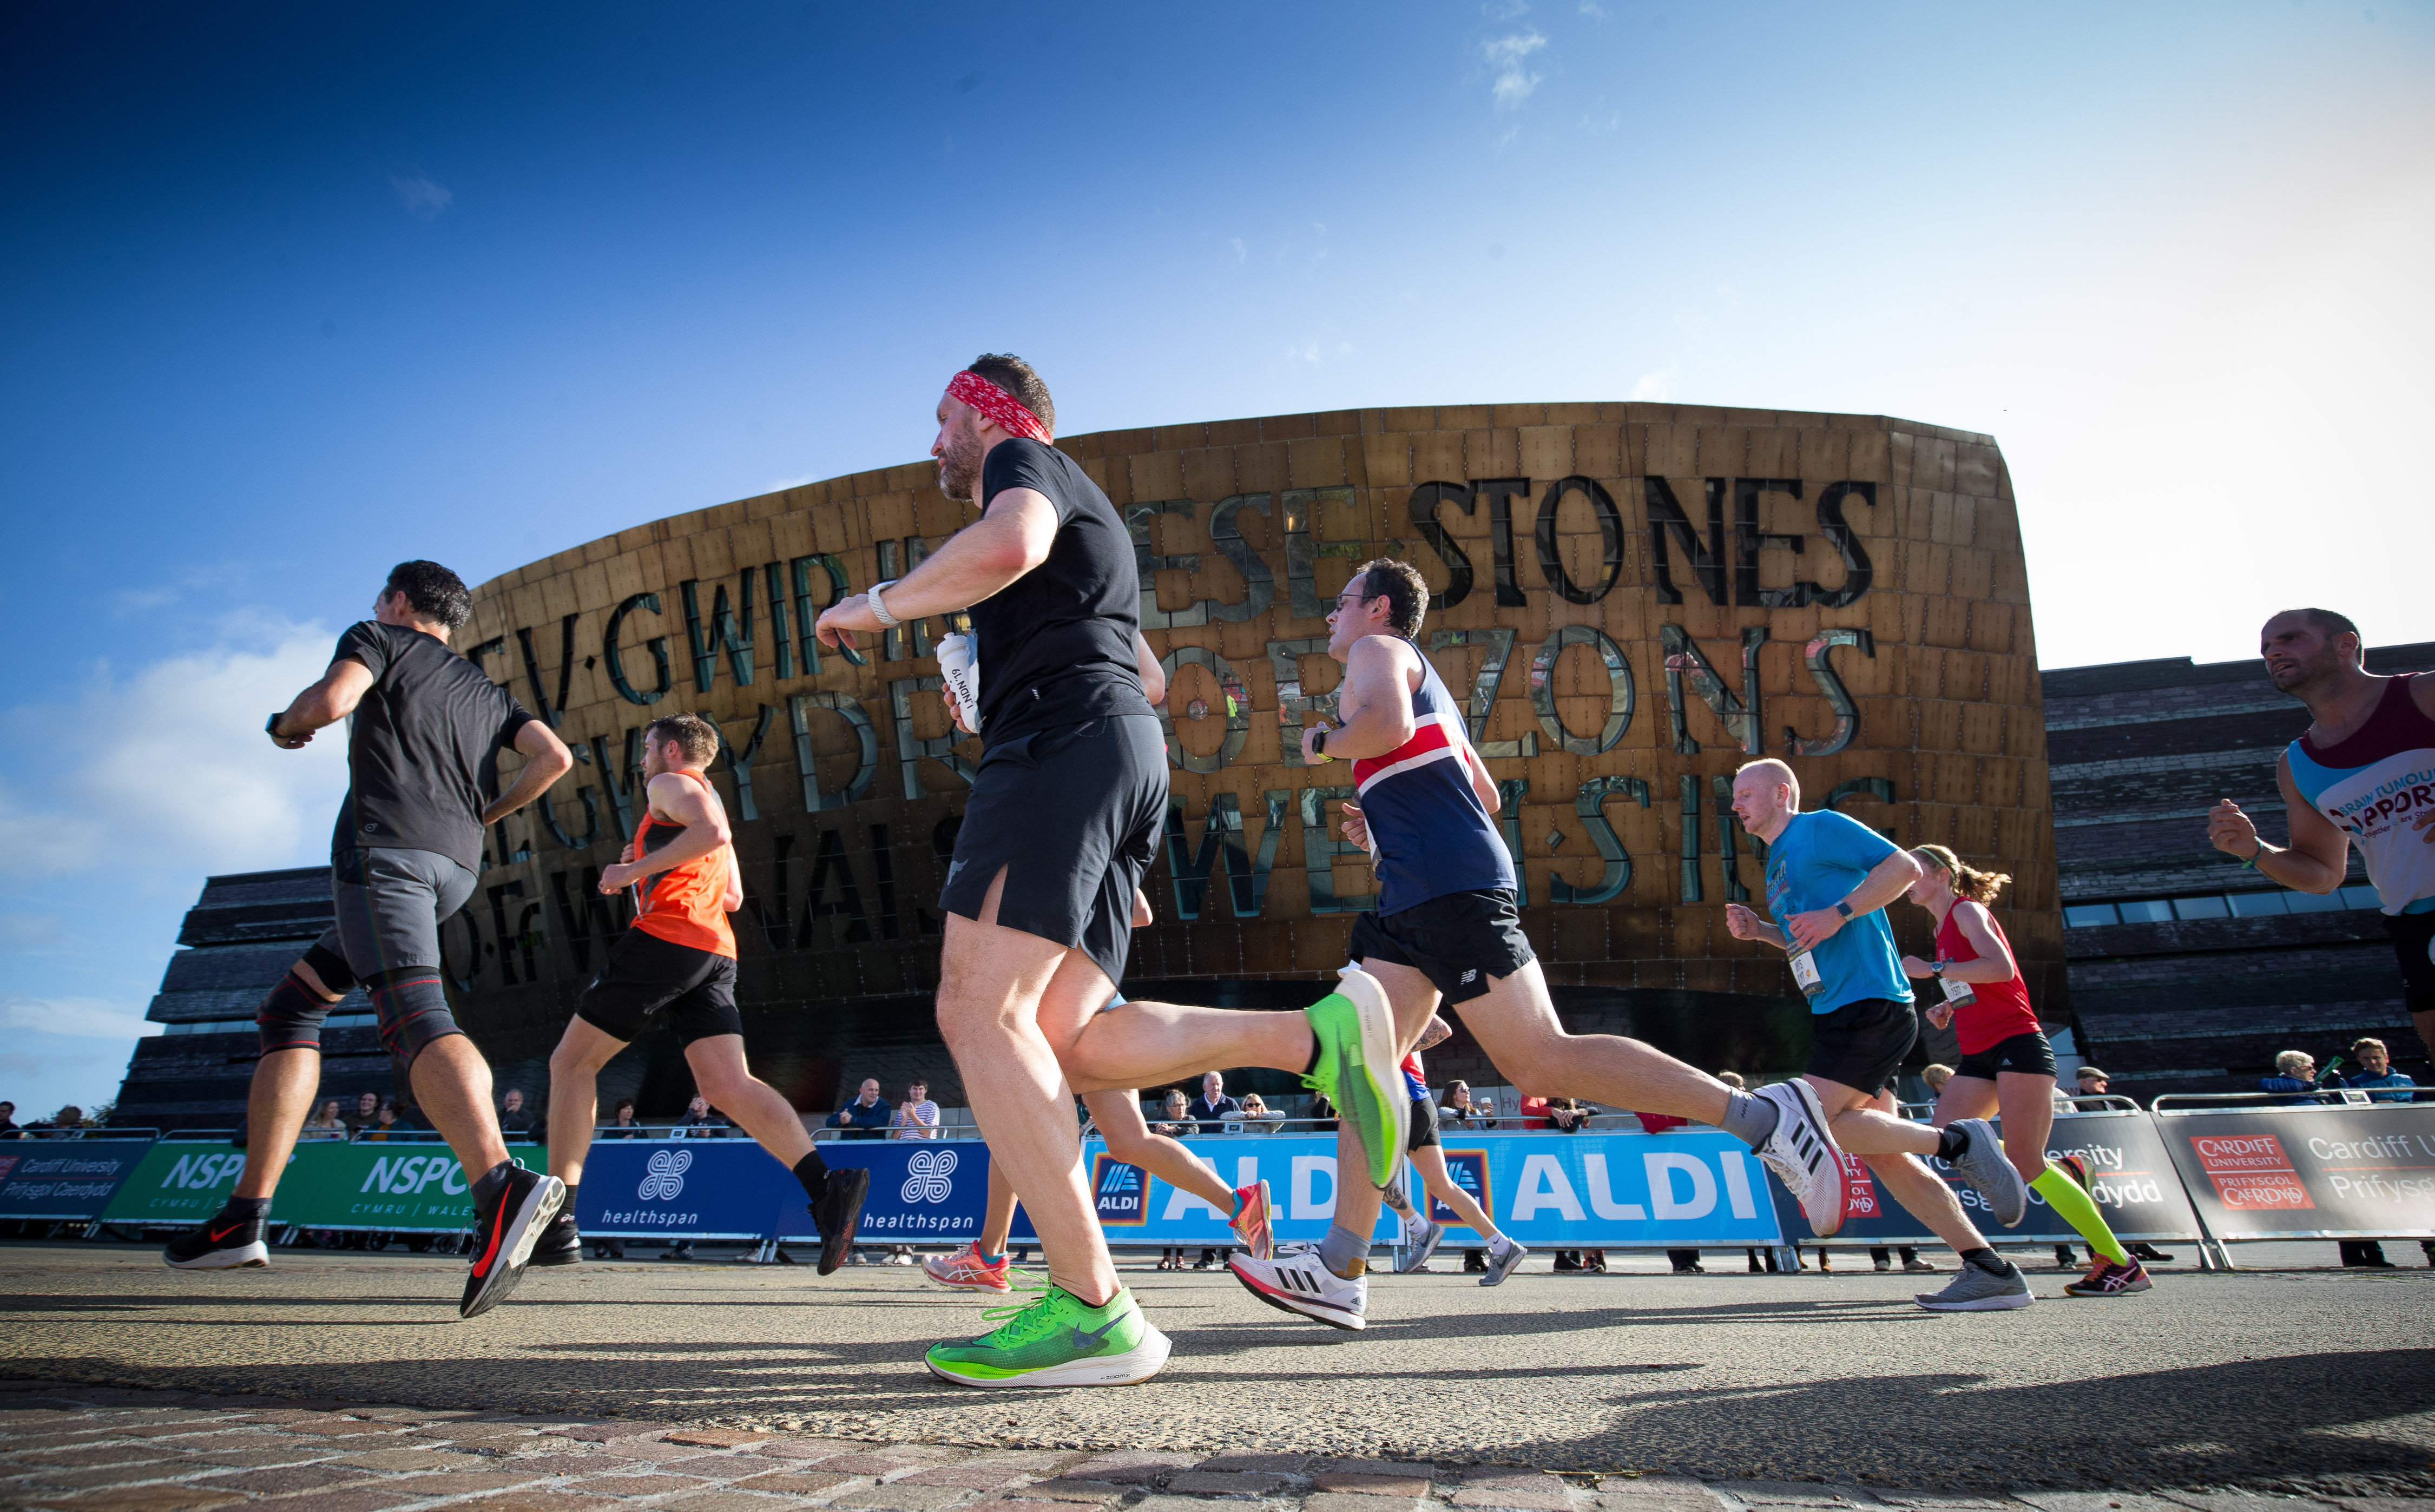 Cardiff Half Marathon runners